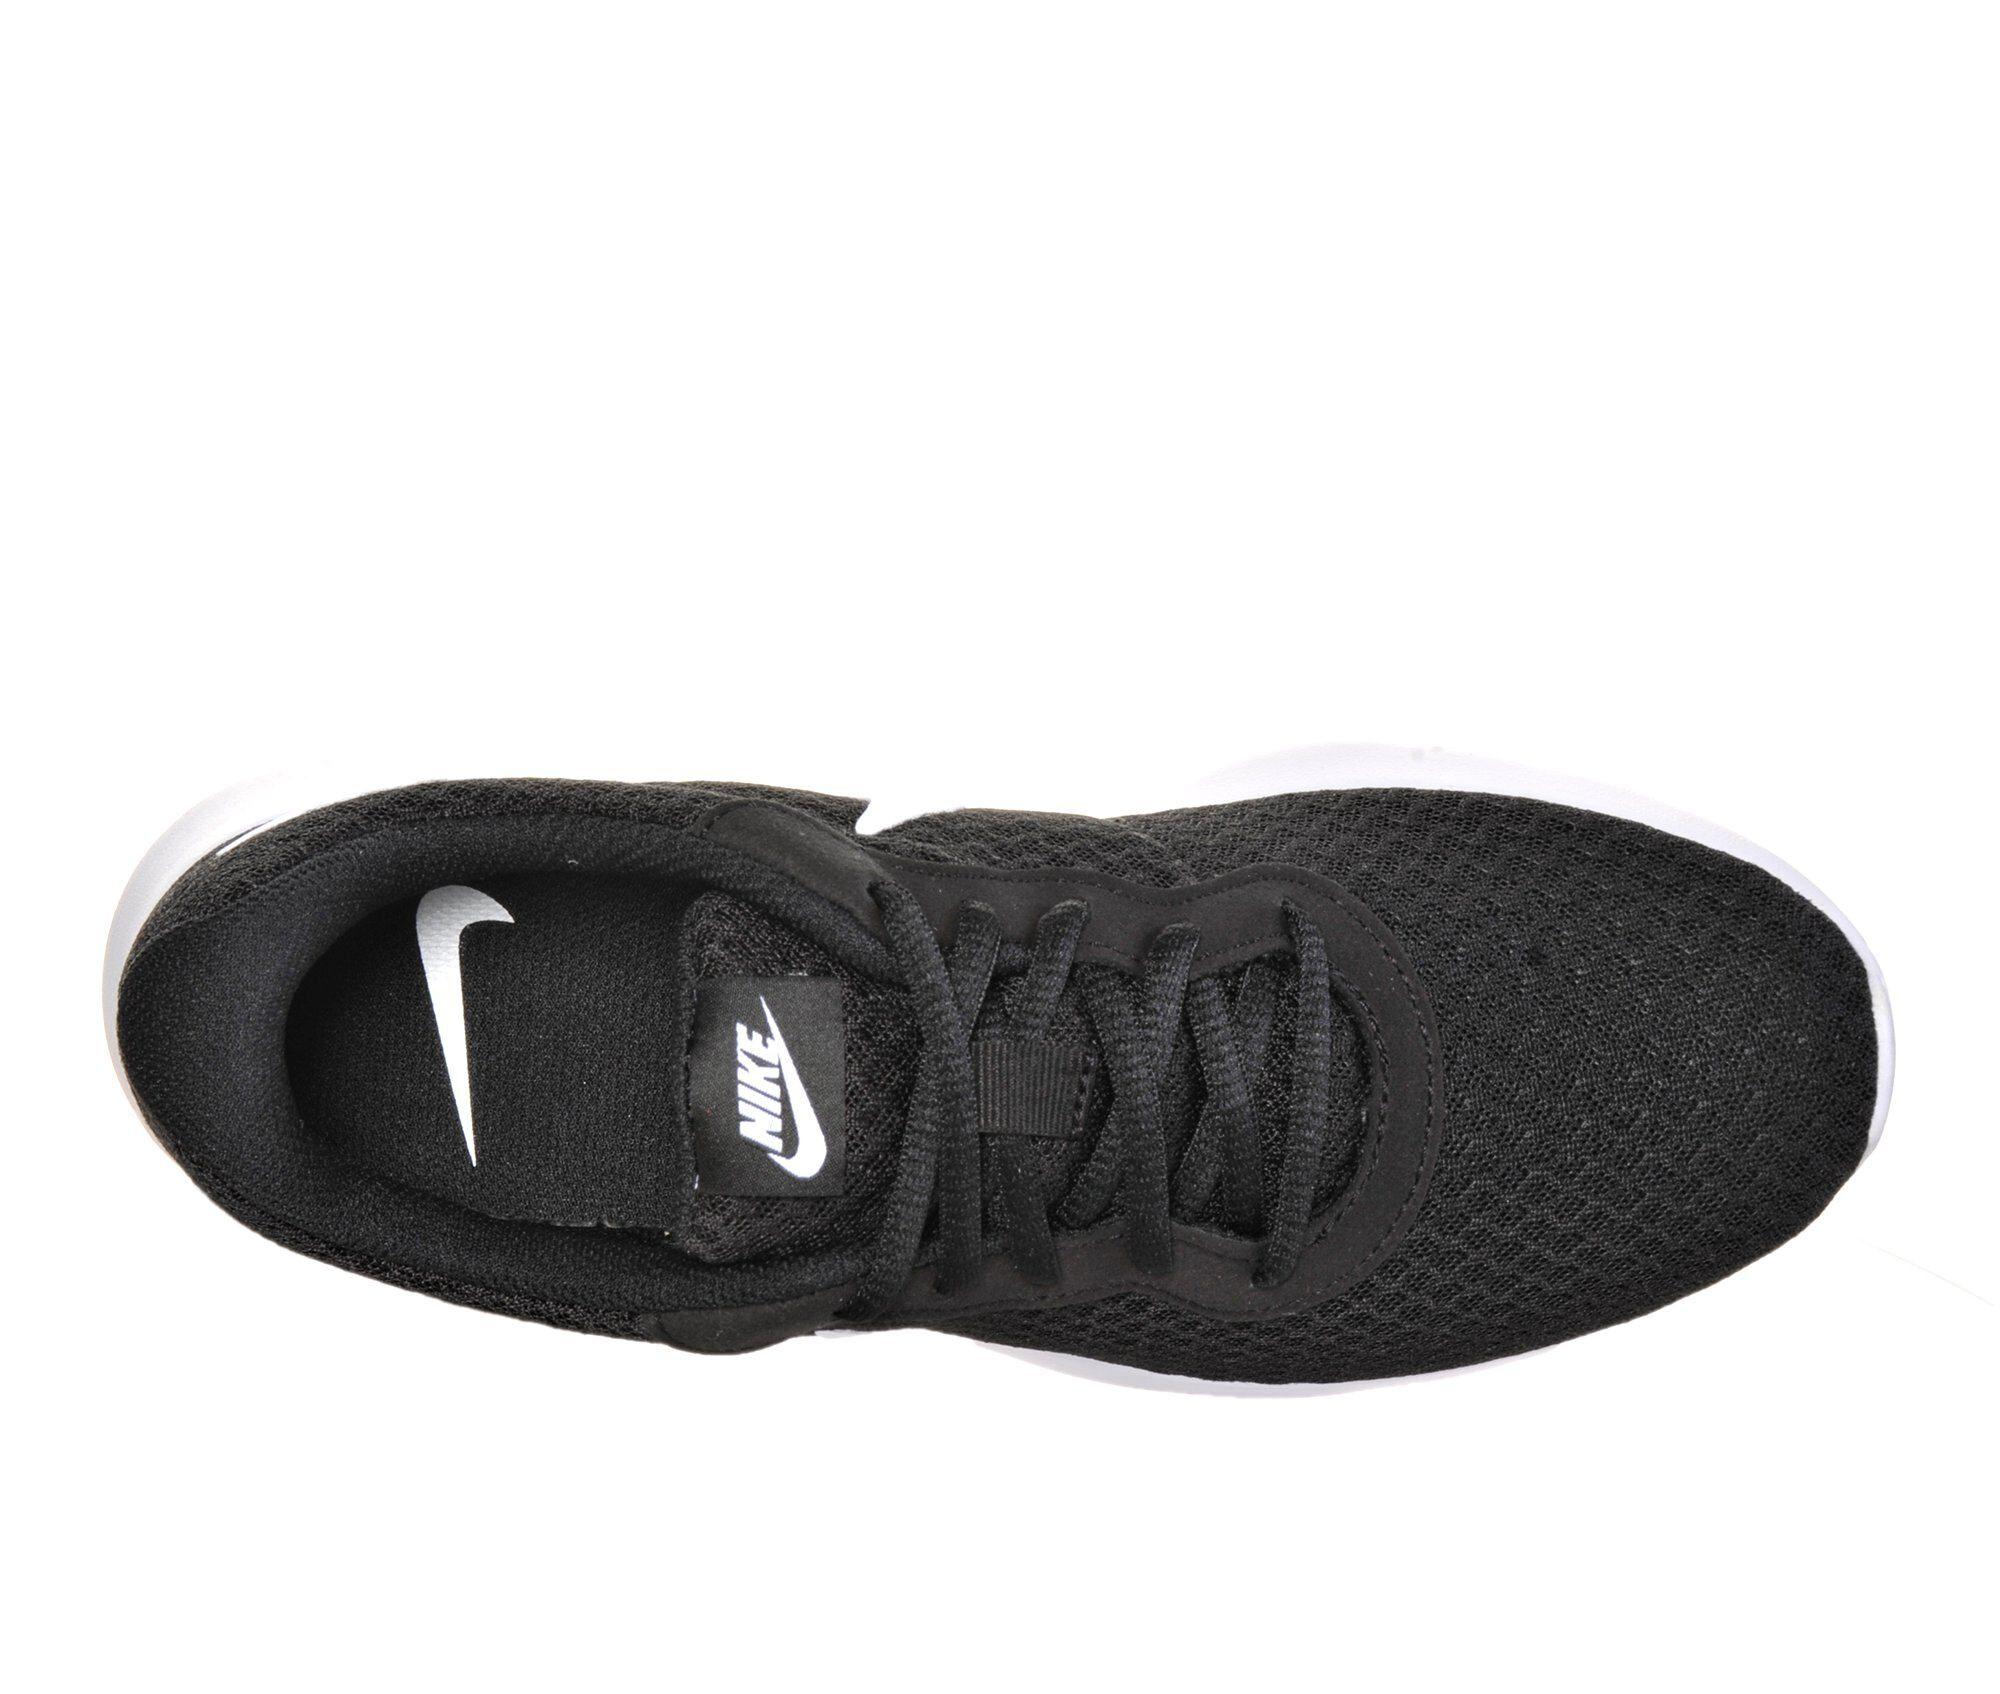 Nike Denim Tanjun Athletic Shoe in Black,White (Black) - Lyst